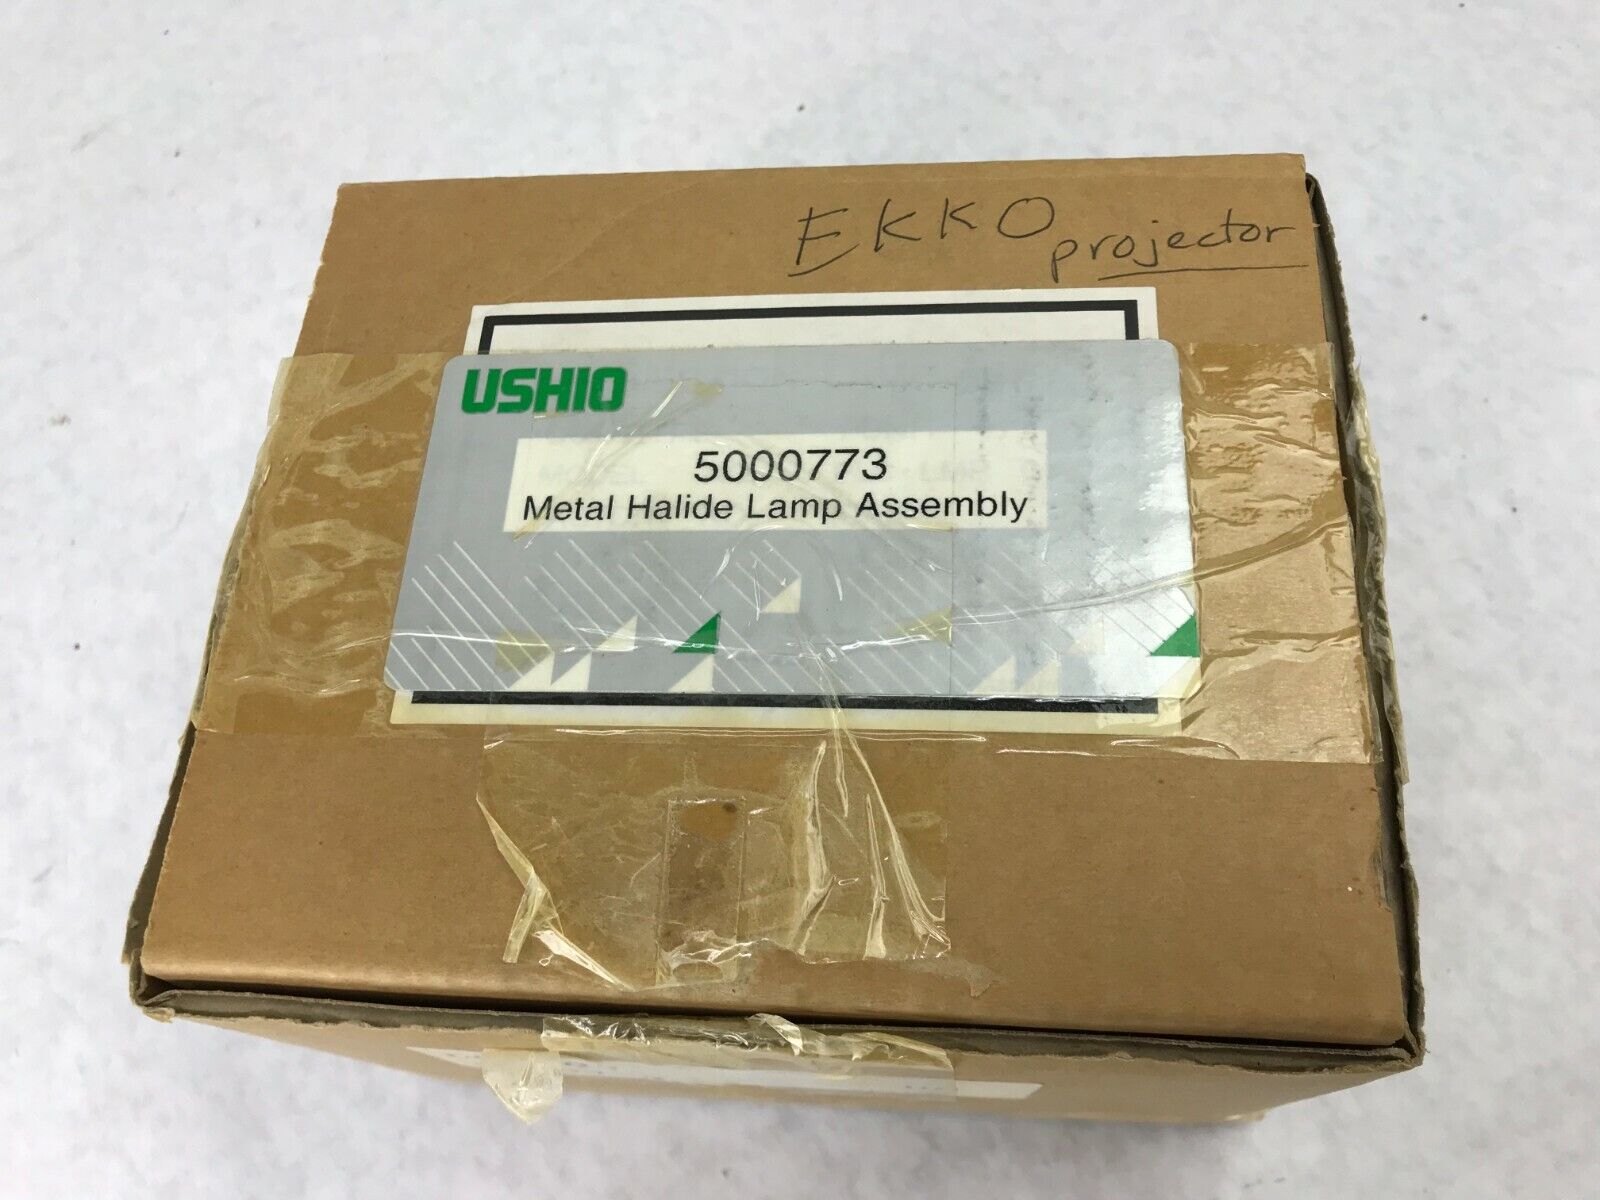 USHIO 5000773 Metal Halide Lamp Assembly